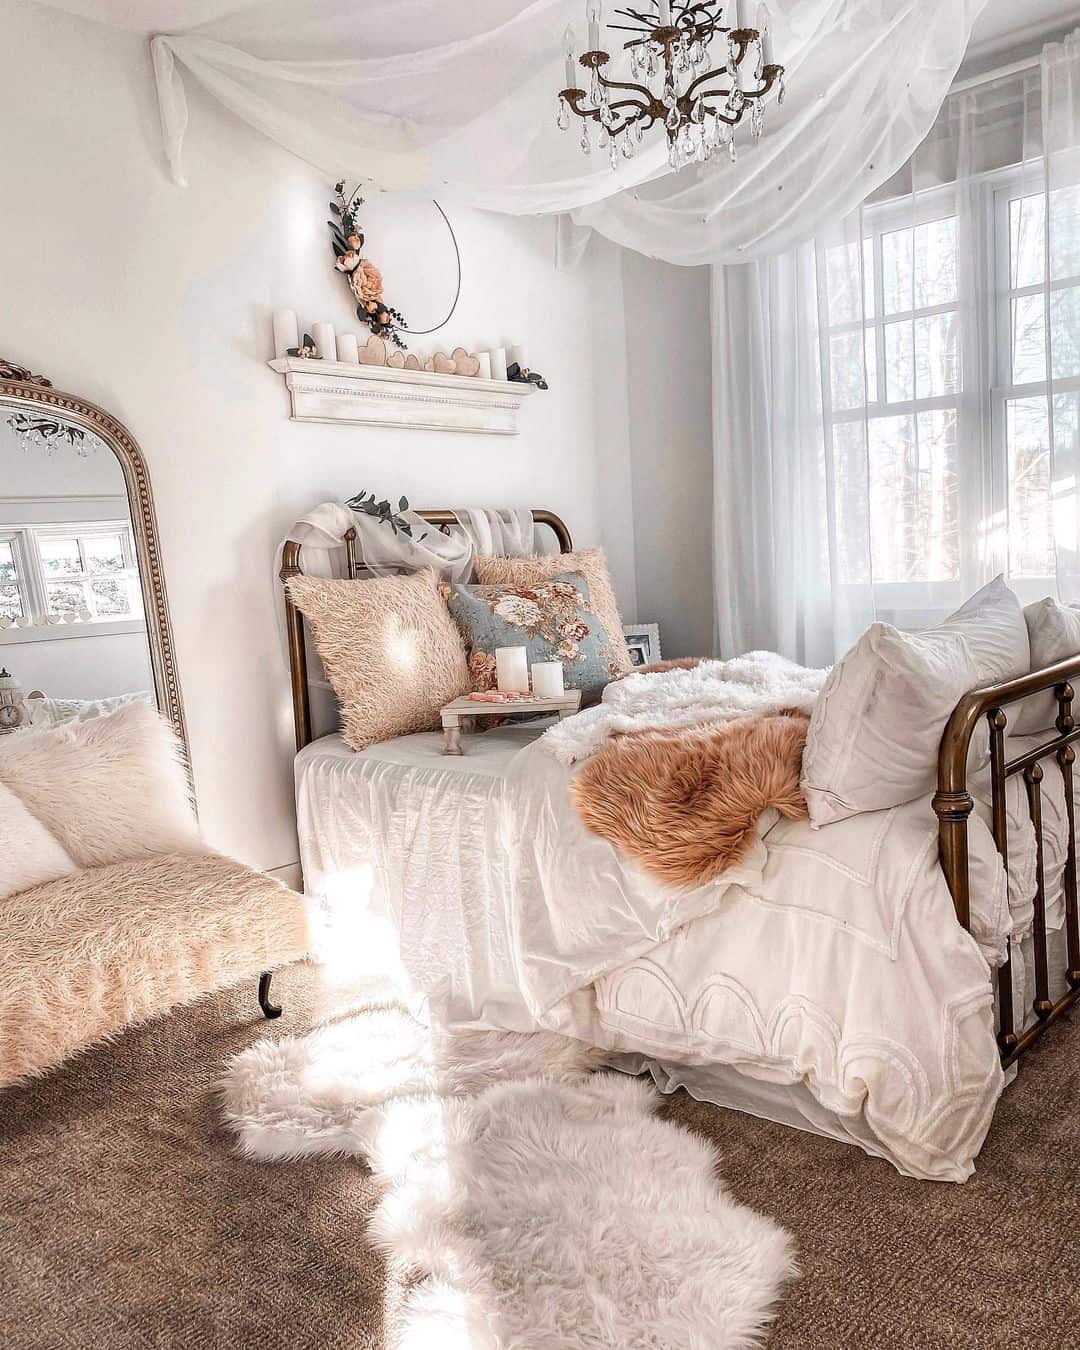 Rustic Charm: Cozy Country Bedroom Delight